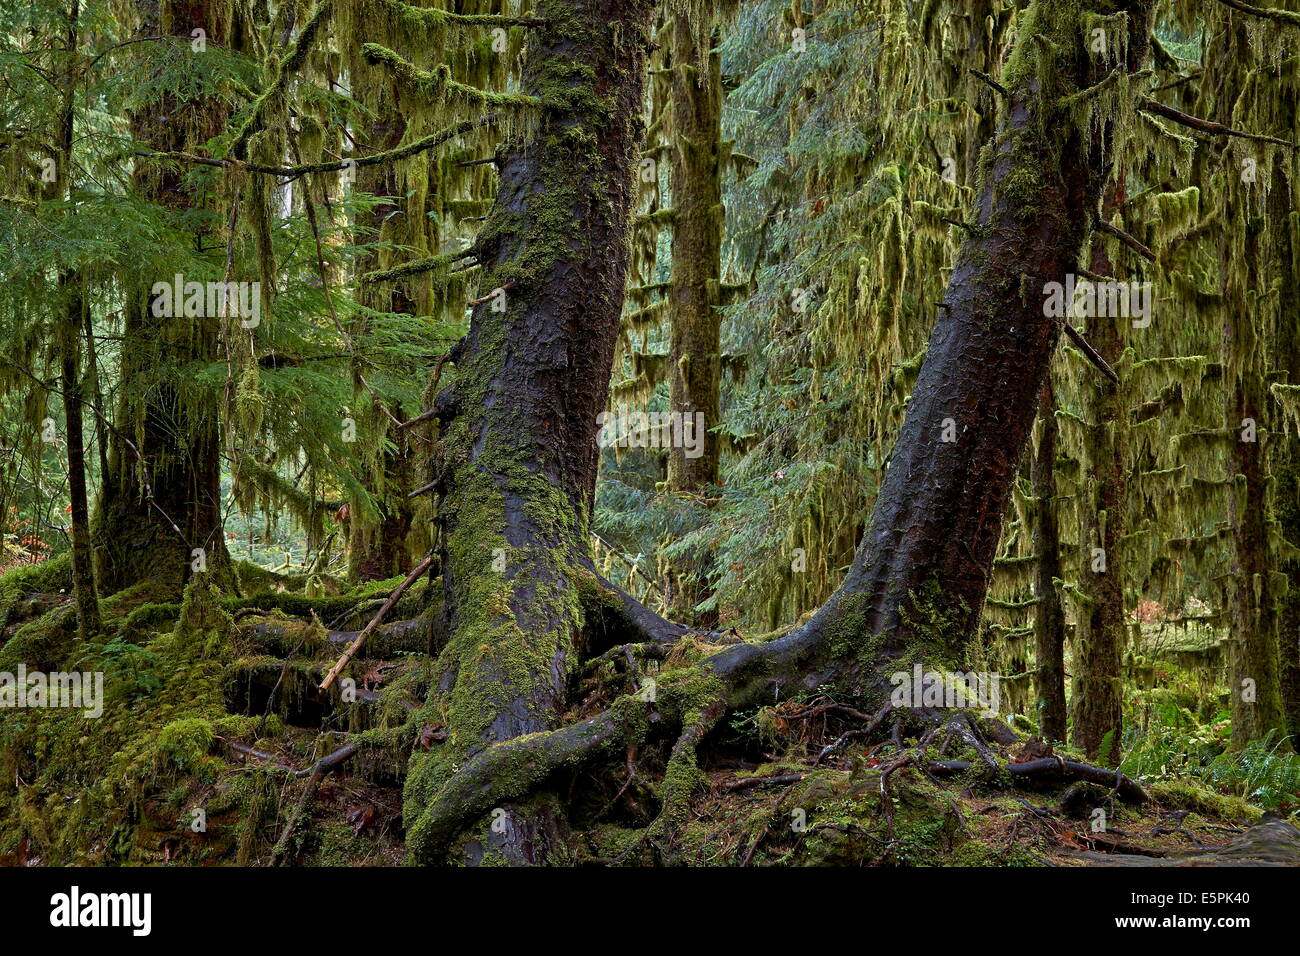 Moosbedeckten Baumstämme in den Regenwald Olympic National Park, der UNESCO, US-Bundesstaat Washington, Vereinigte Staaten von Amerika Stockfoto